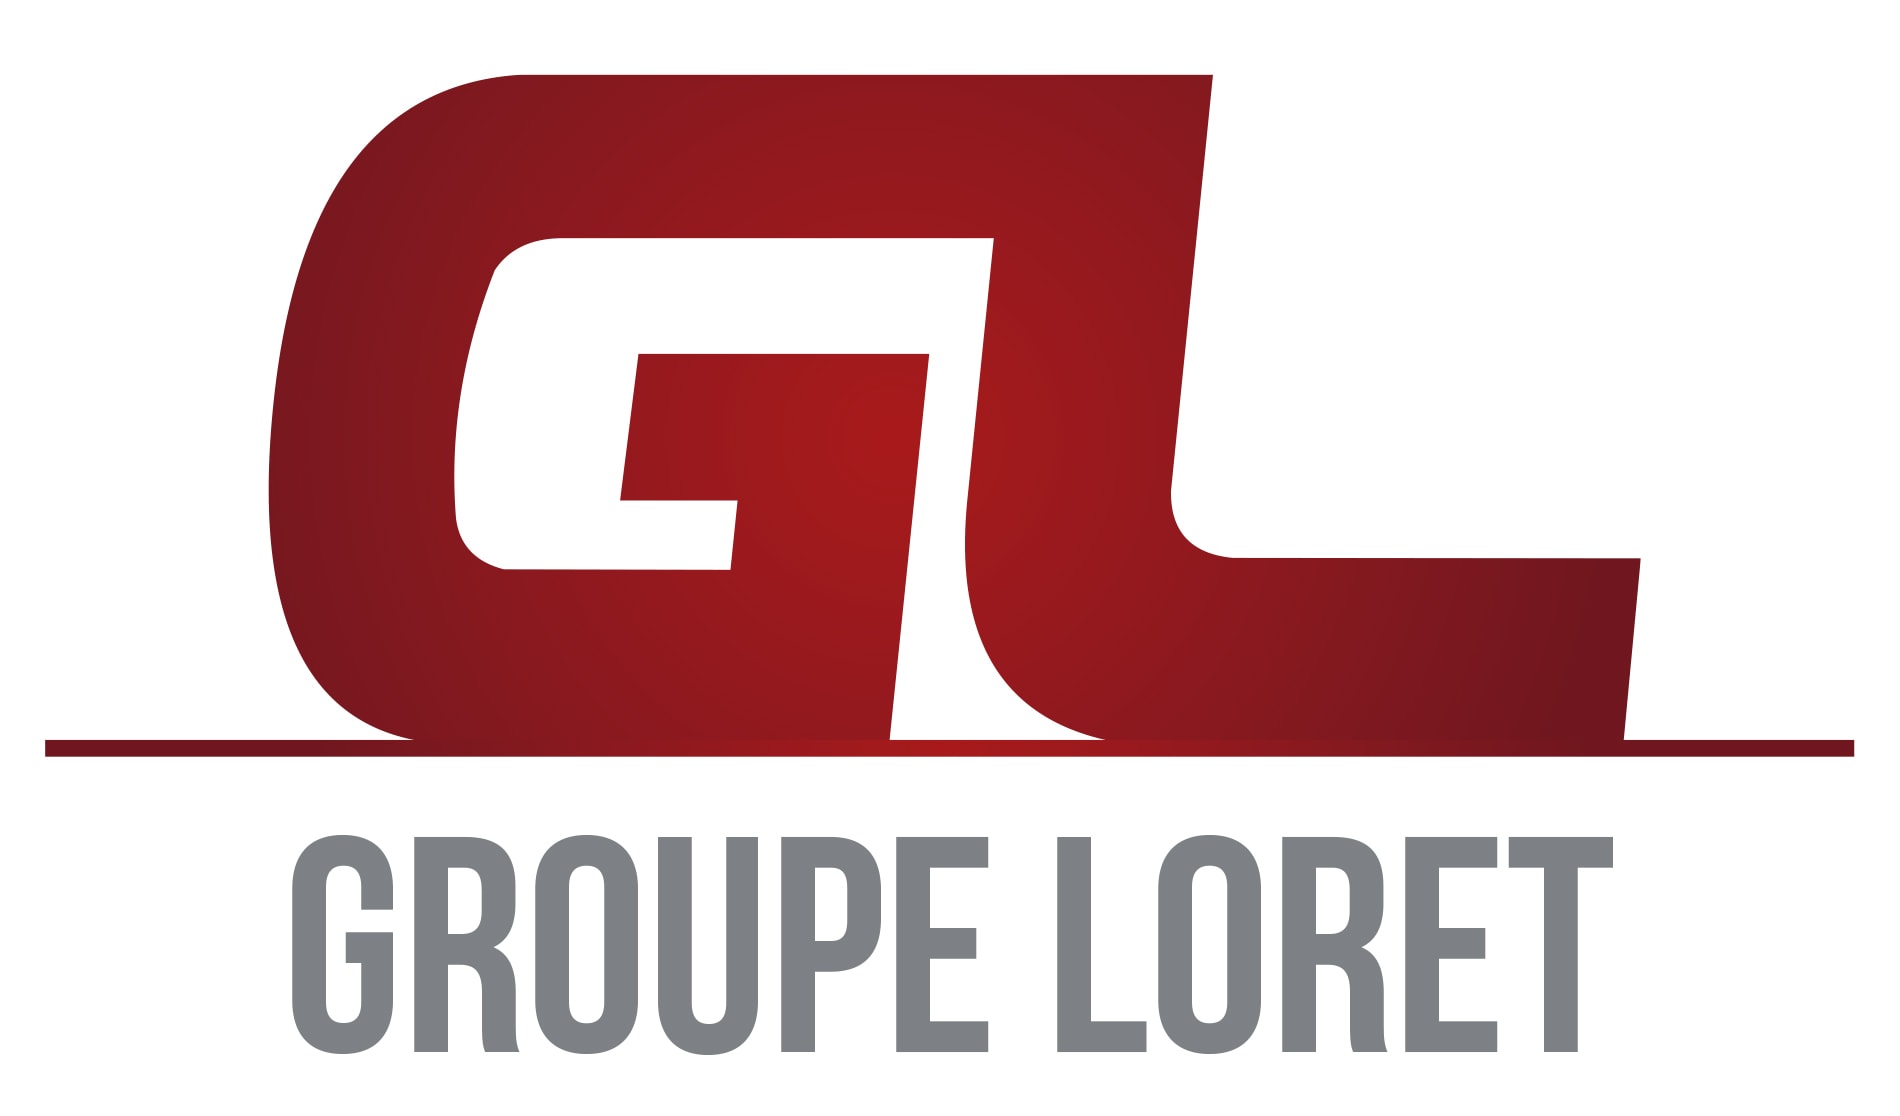 Groupe Loret